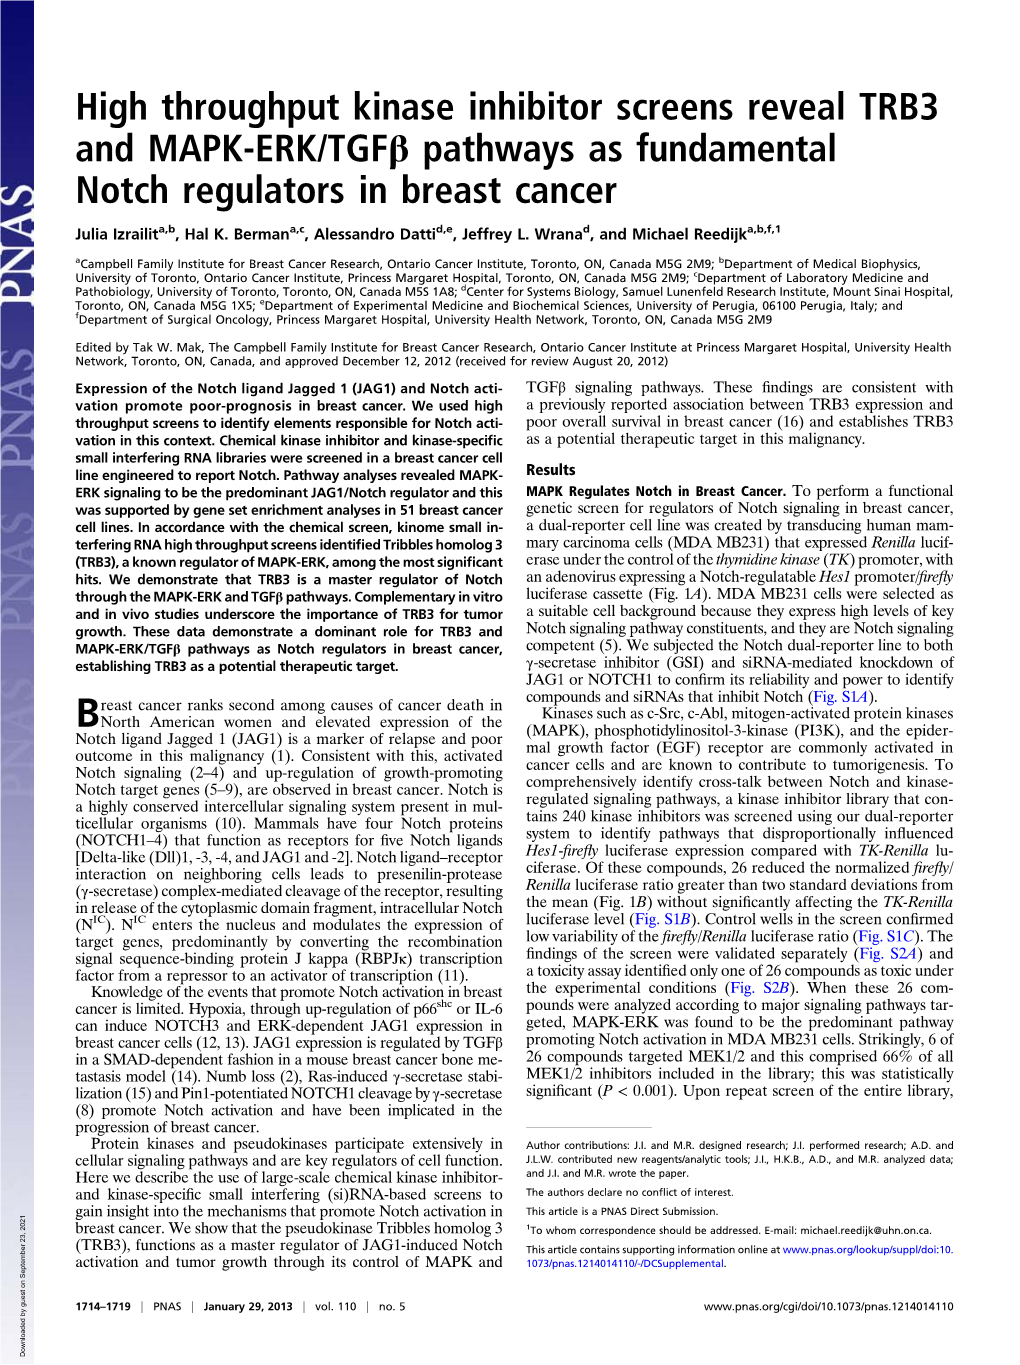 High Throughput Kinase Inhibitor Screens Reveal TRB3 and MAPK-ERK/Tgfβ Pathways As Fundamental Notch Regulators in Breast Cancer